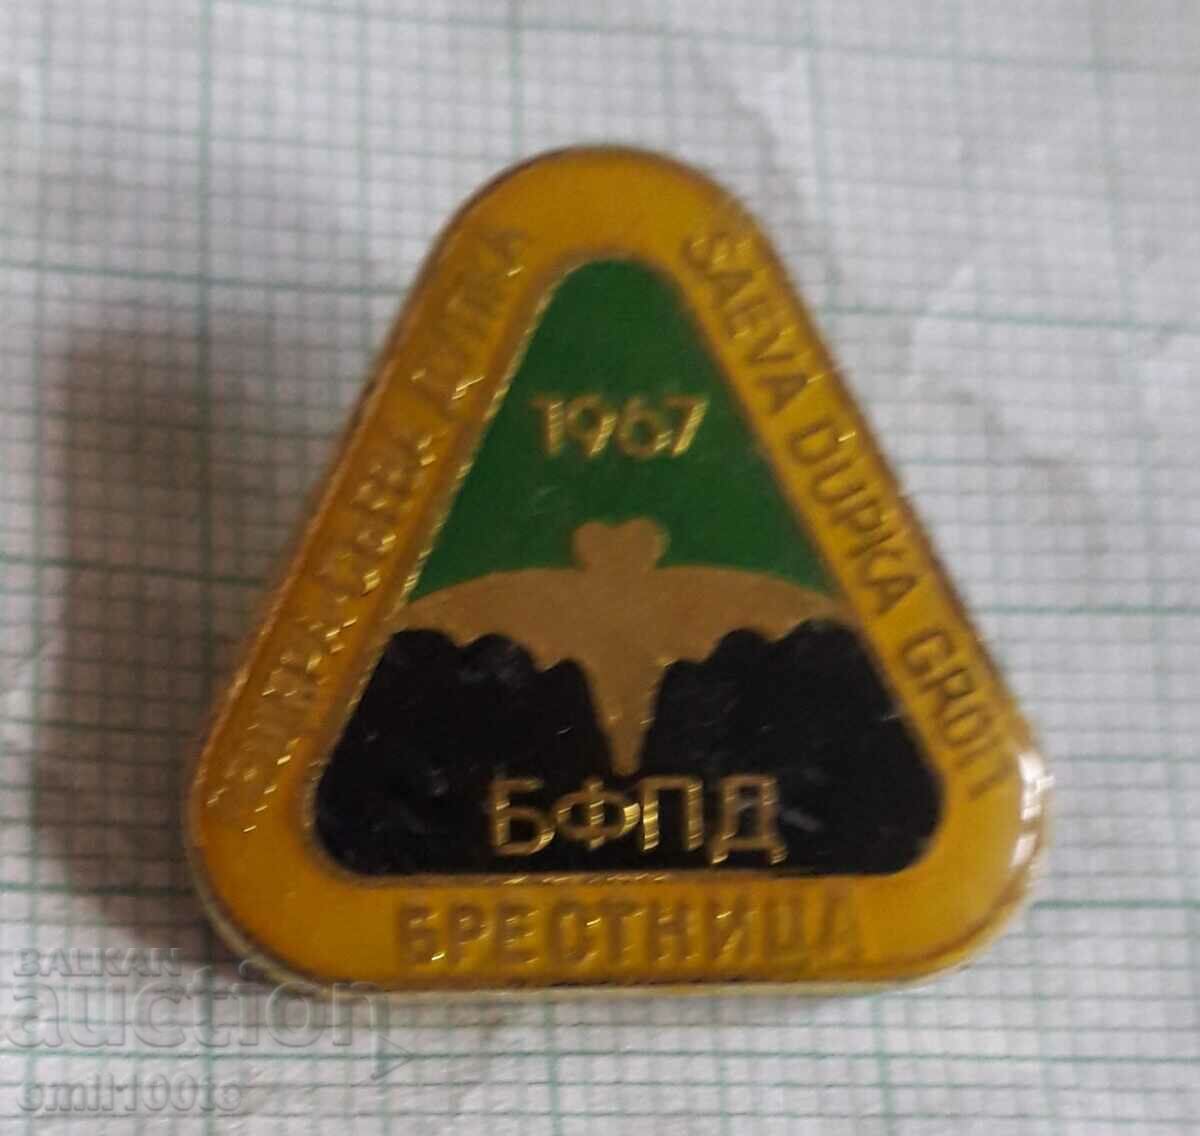 Badge - Saeva Dupka cave Brestnitsa BFPD